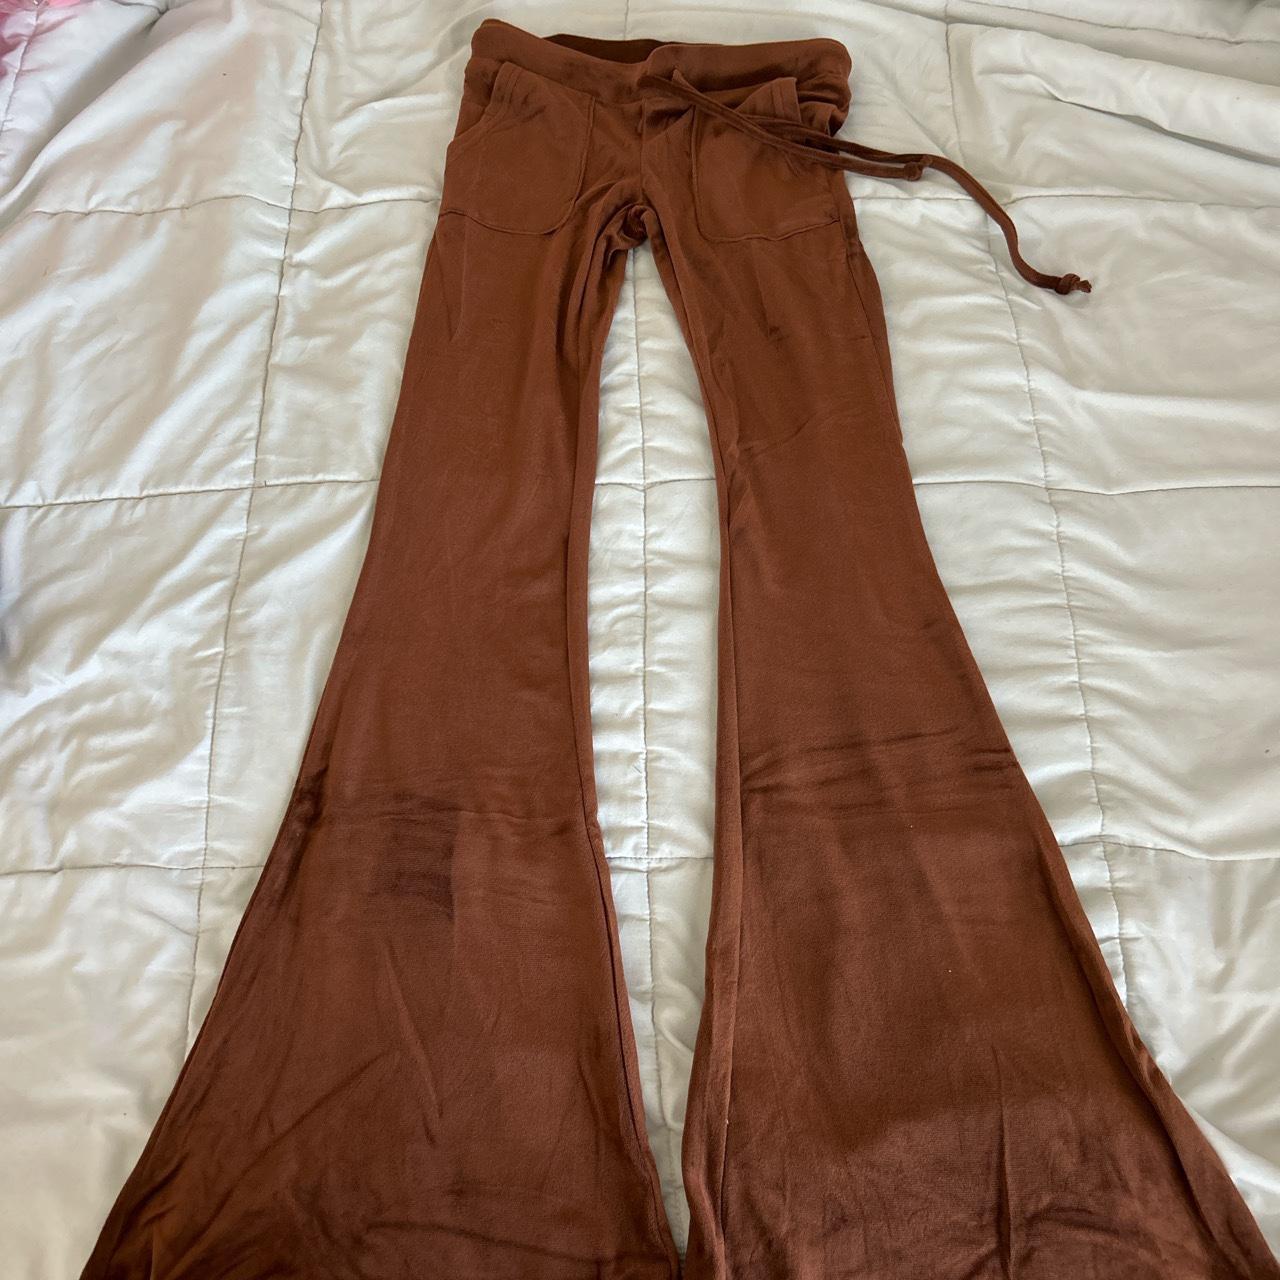 brown velour track suit set🤎 brand new never worn - Depop